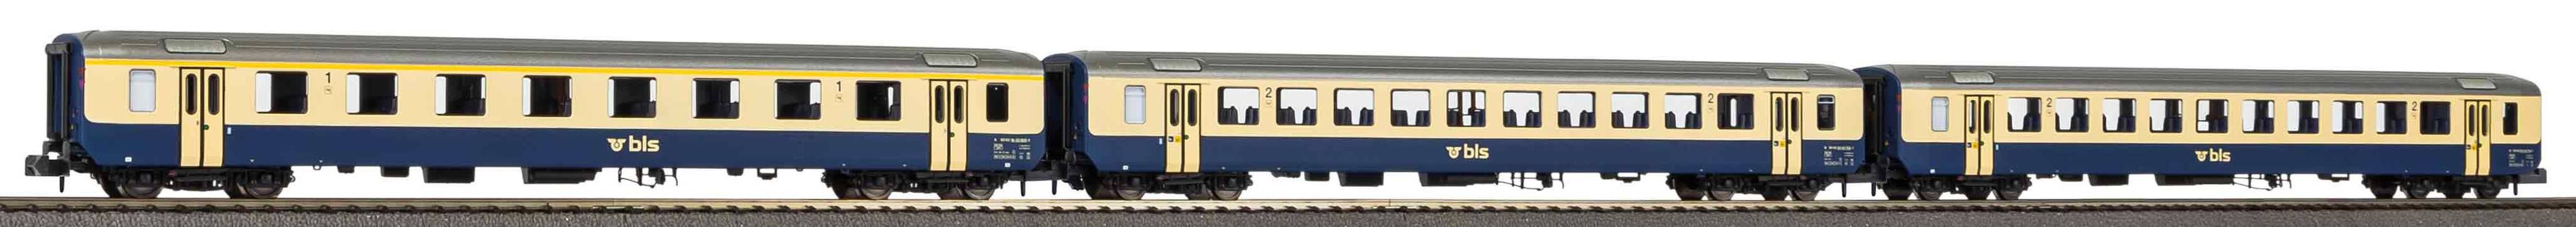 Piko 94461, Spur N, BLS EW I RX-Zugset, 3-teilig (1x 1.Klasse, 2x 2.Klasse), Ep. VI